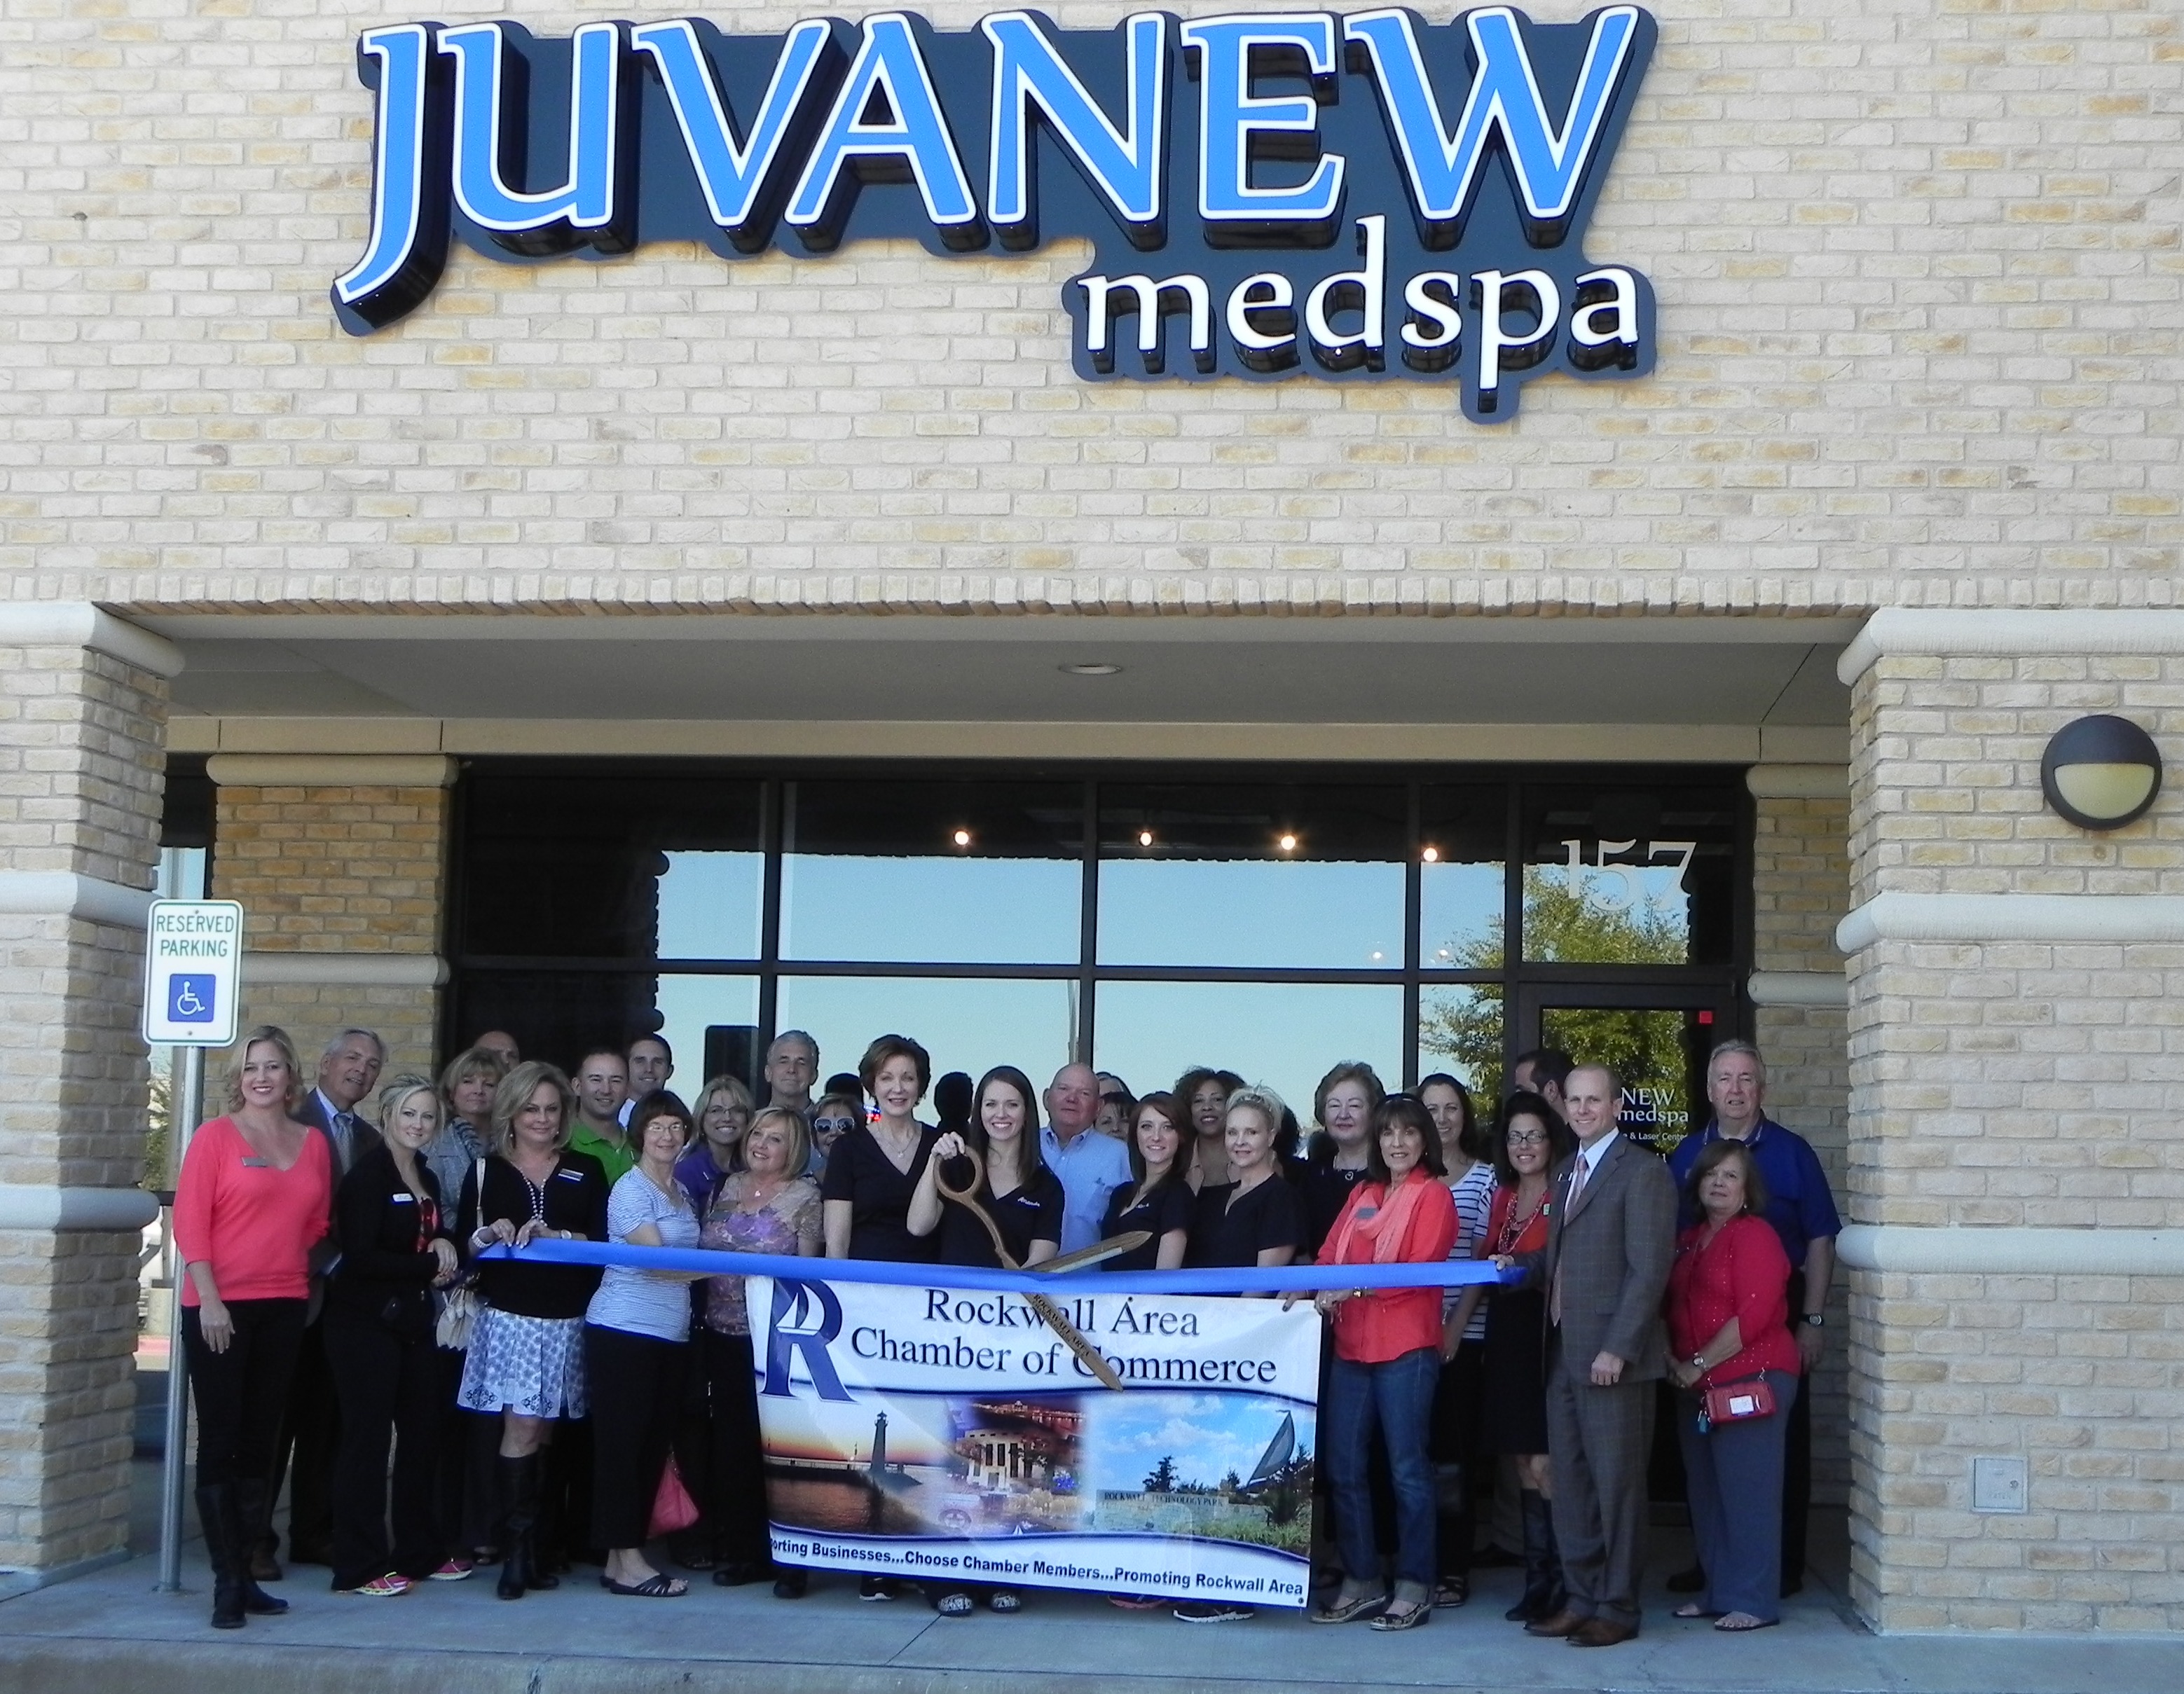 Juvanew Medspa celebrates new location with ribbon cutting